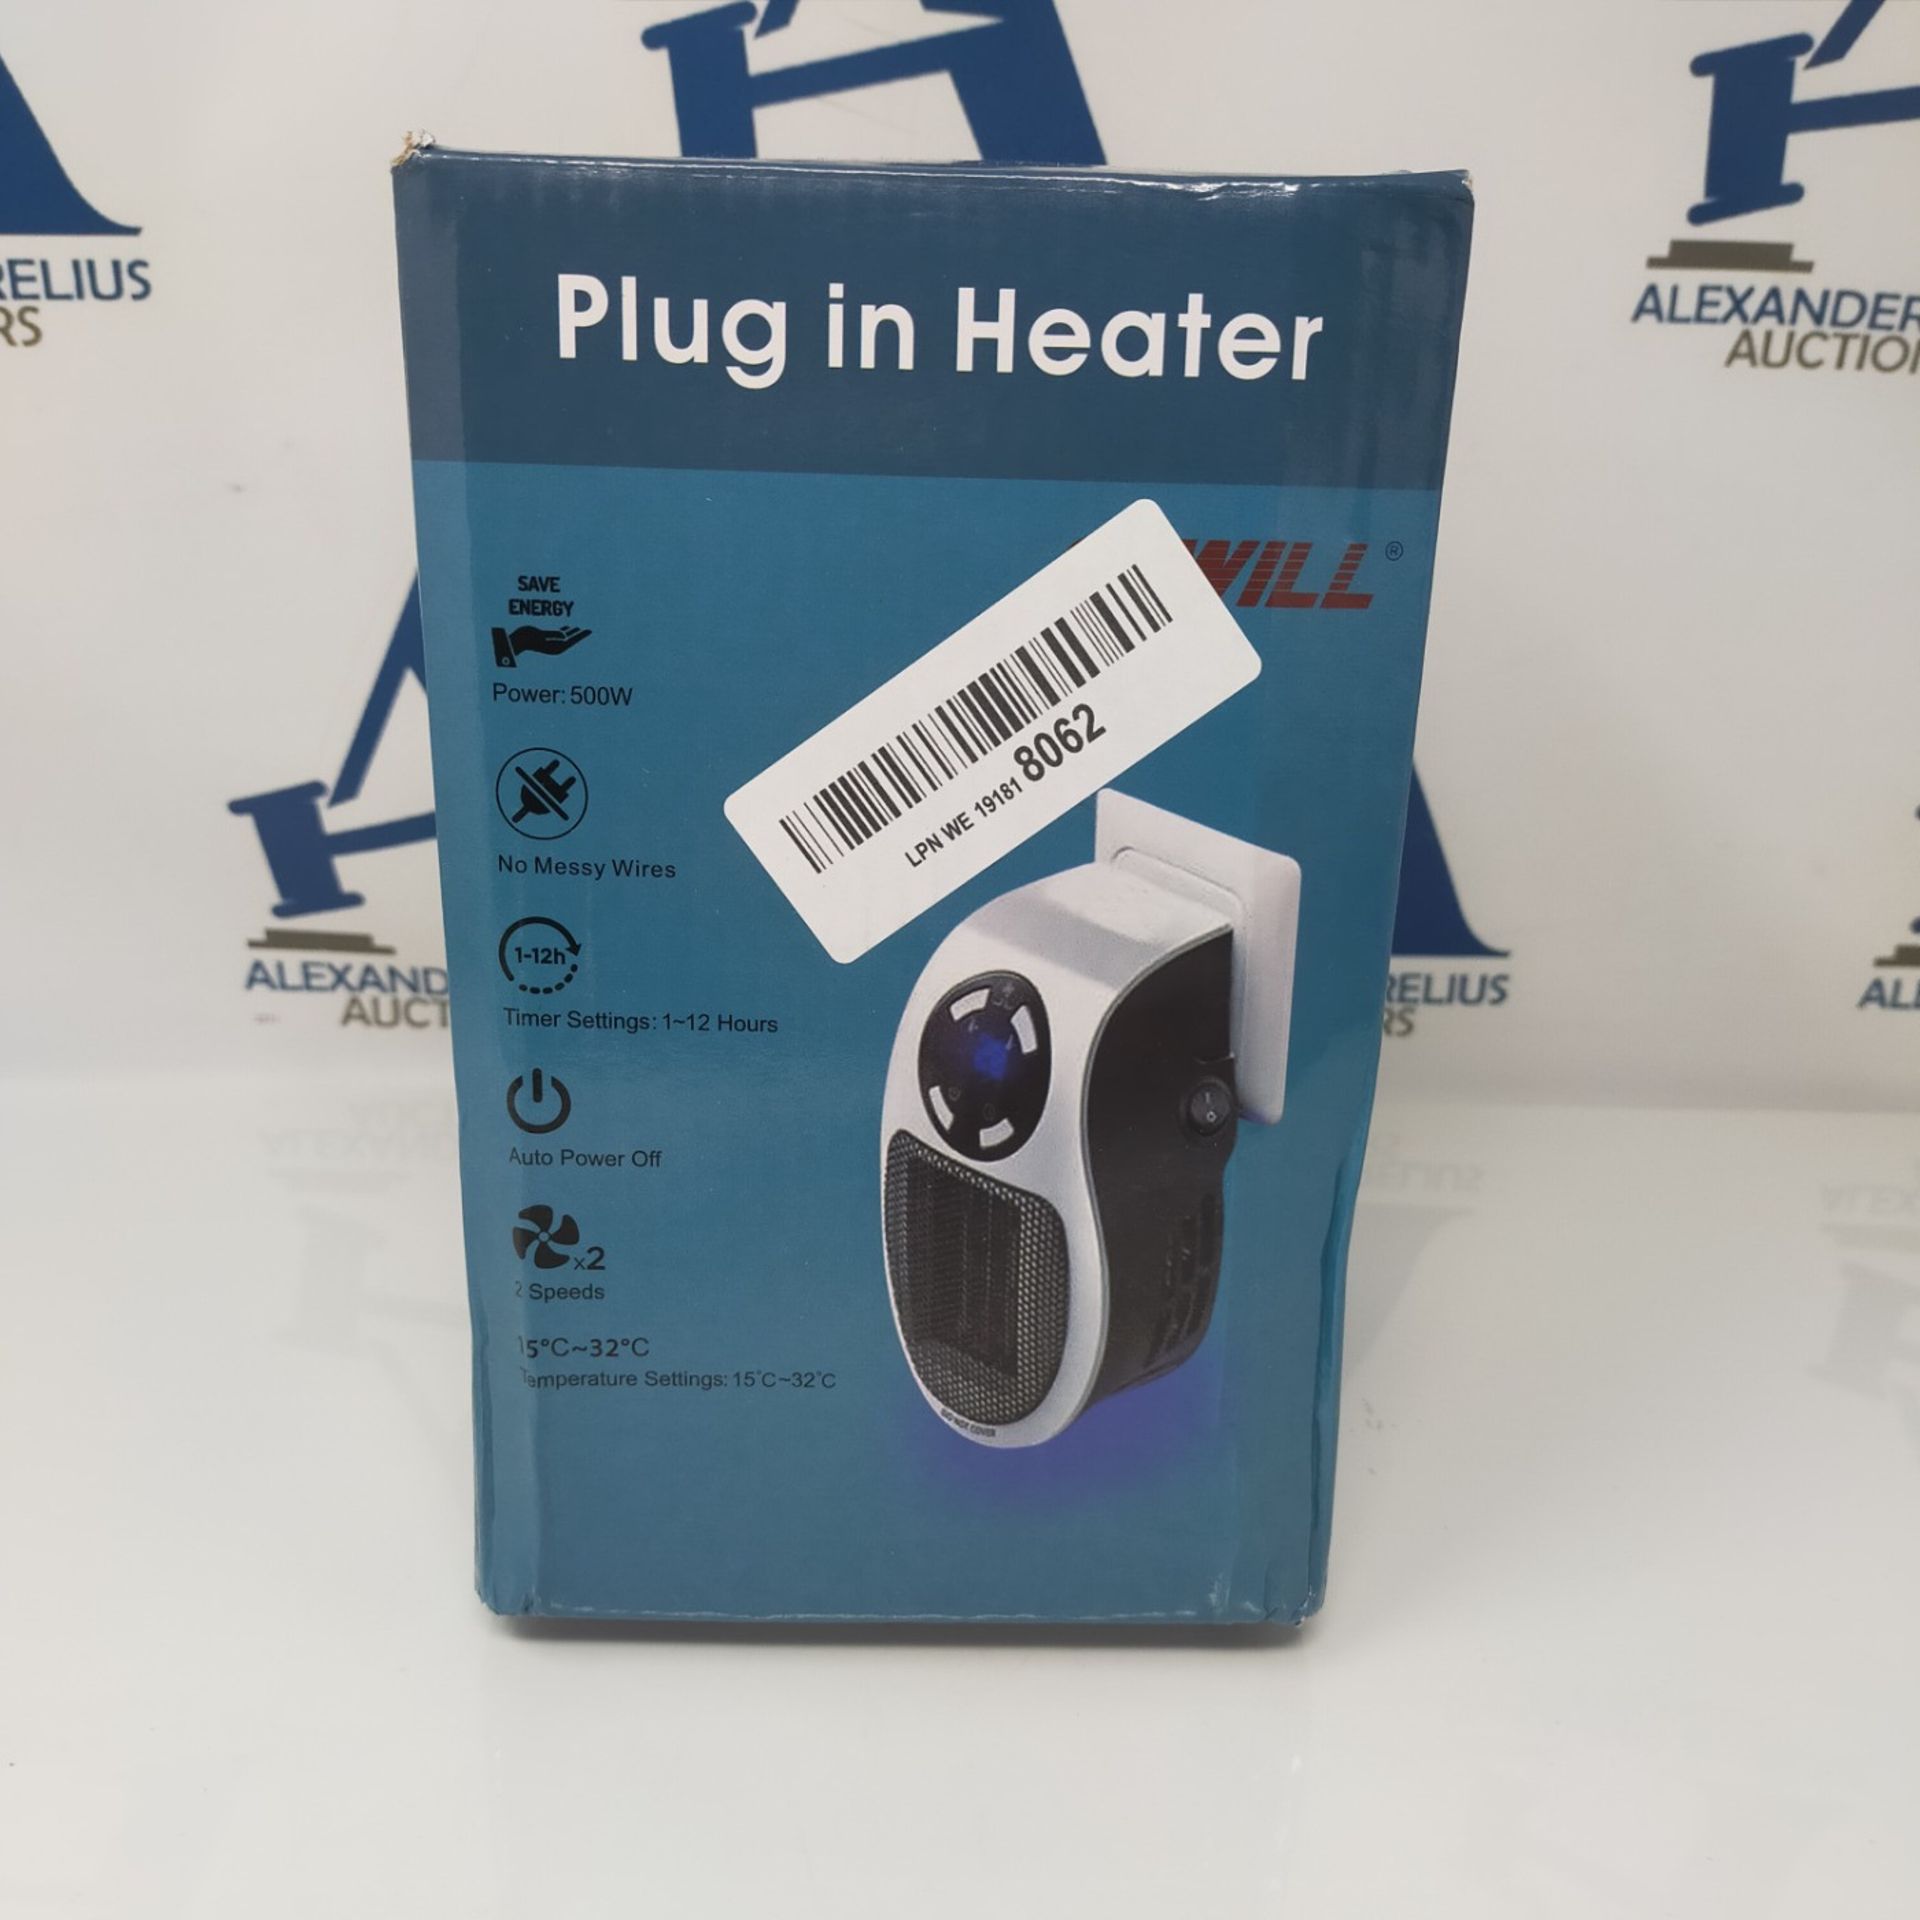 Plug in Heater 500W (White), 15p per Hour Running Cost, Ceramic Mini Portable Electric - Image 2 of 3